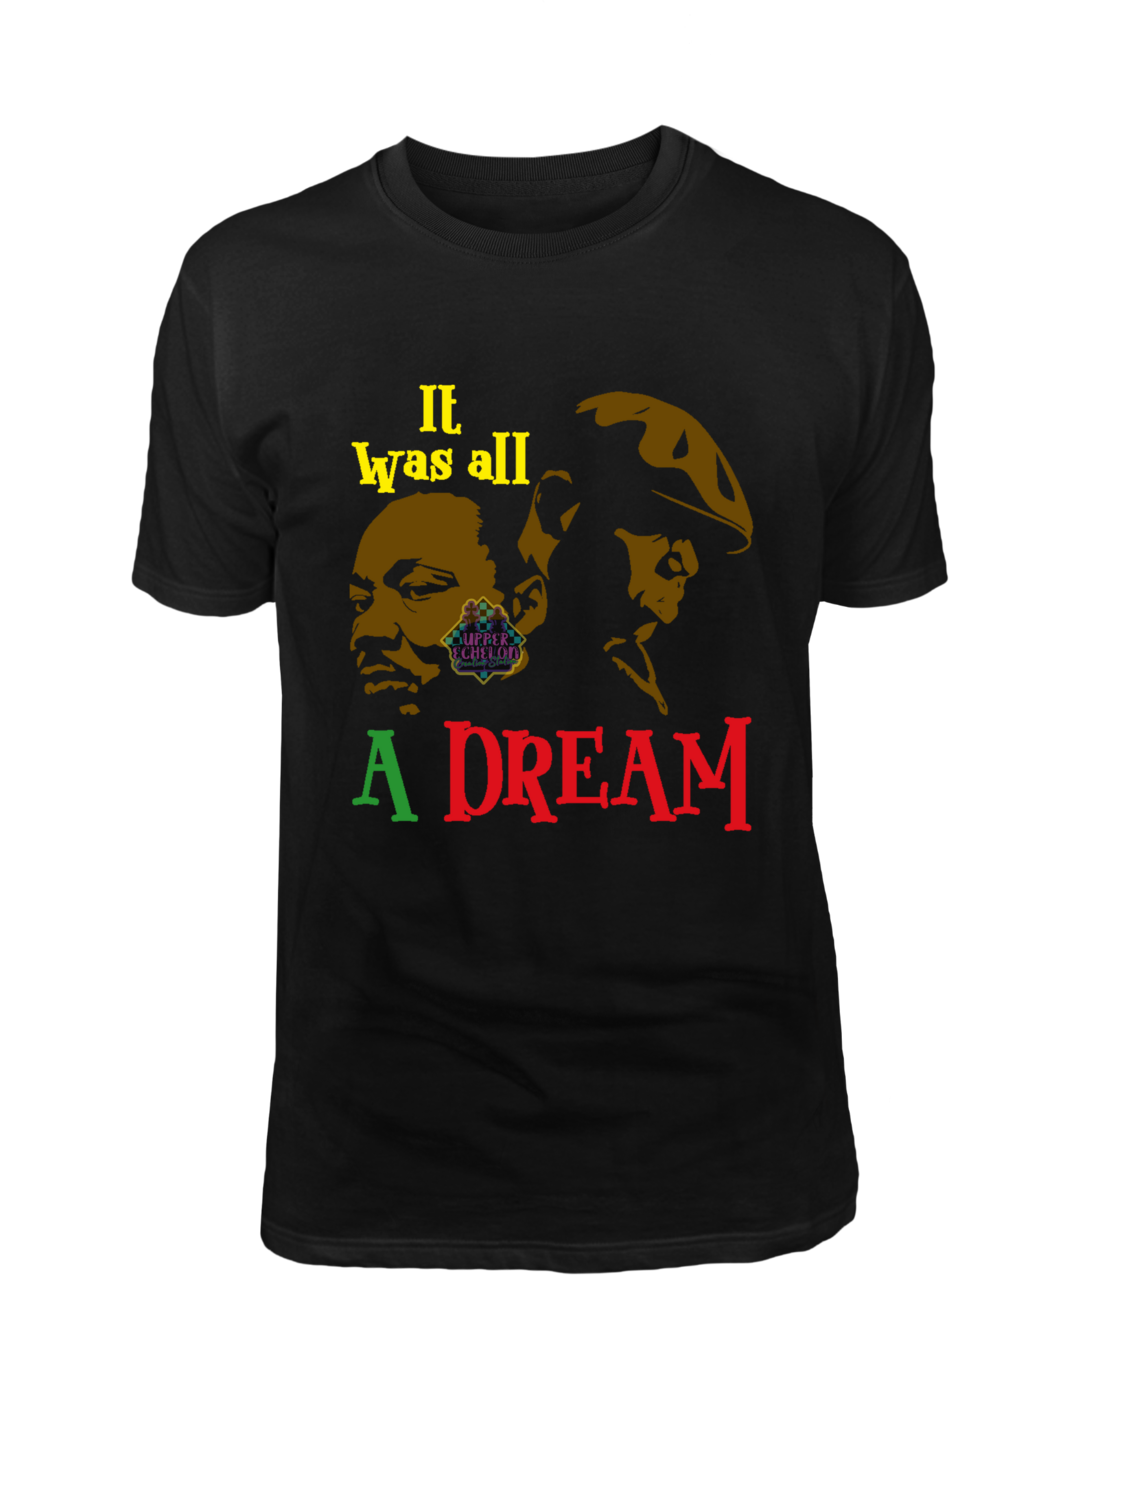 MLK - IT WAS ALL A DREAM